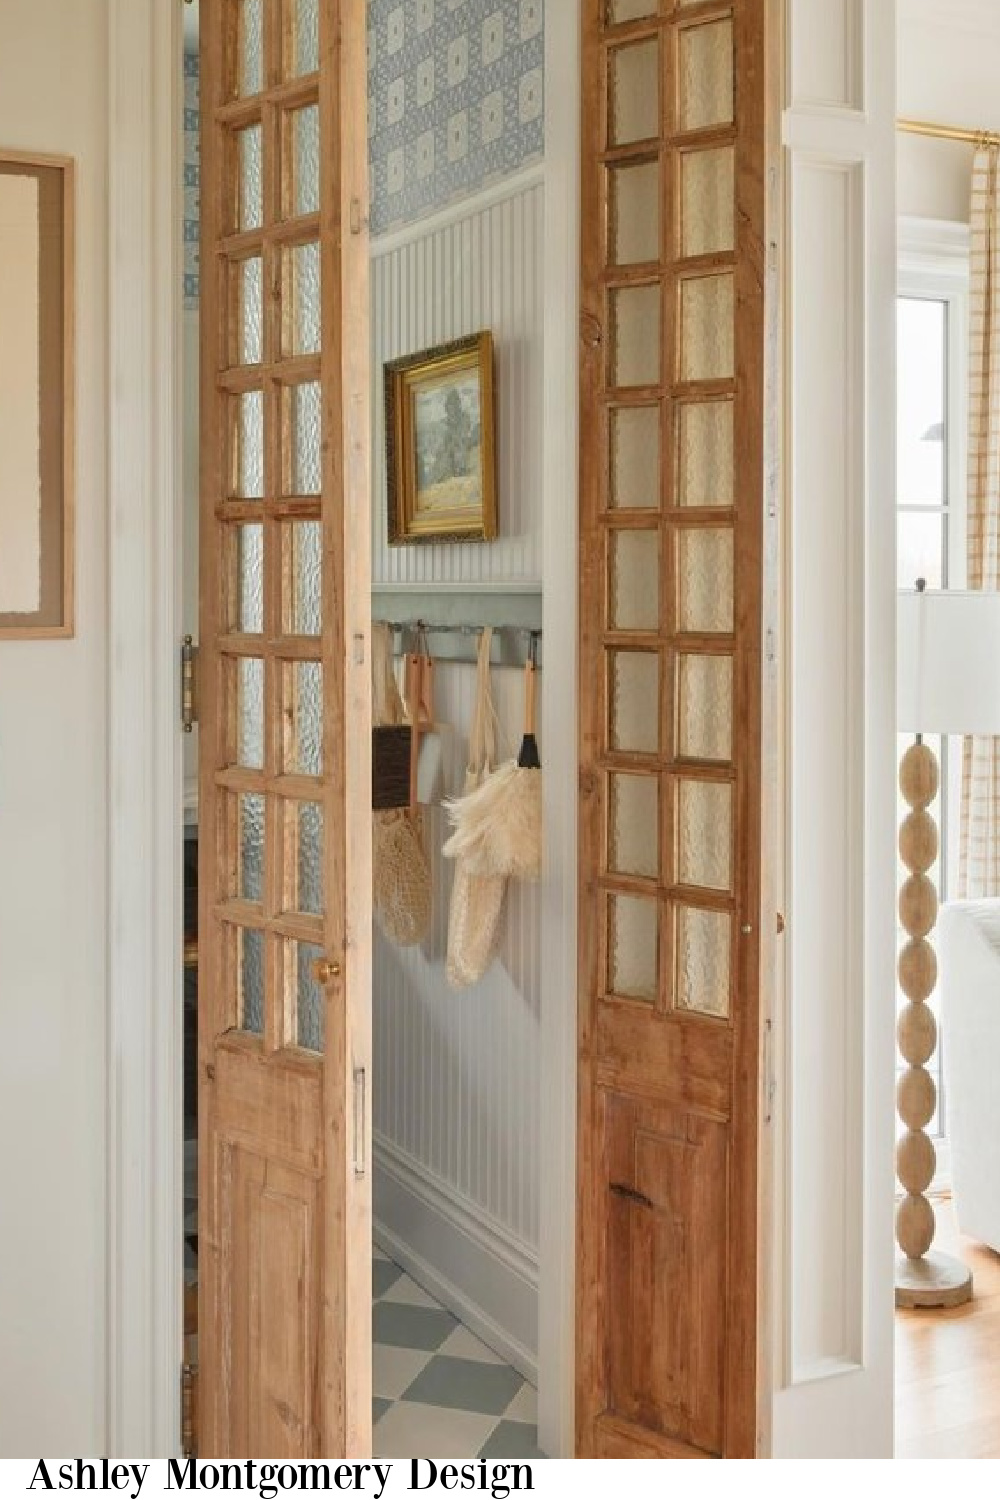 Beautifully designed pantry with narrow French doors - Ashley Montgomery Design. #kitchenpantry #timelessdesign